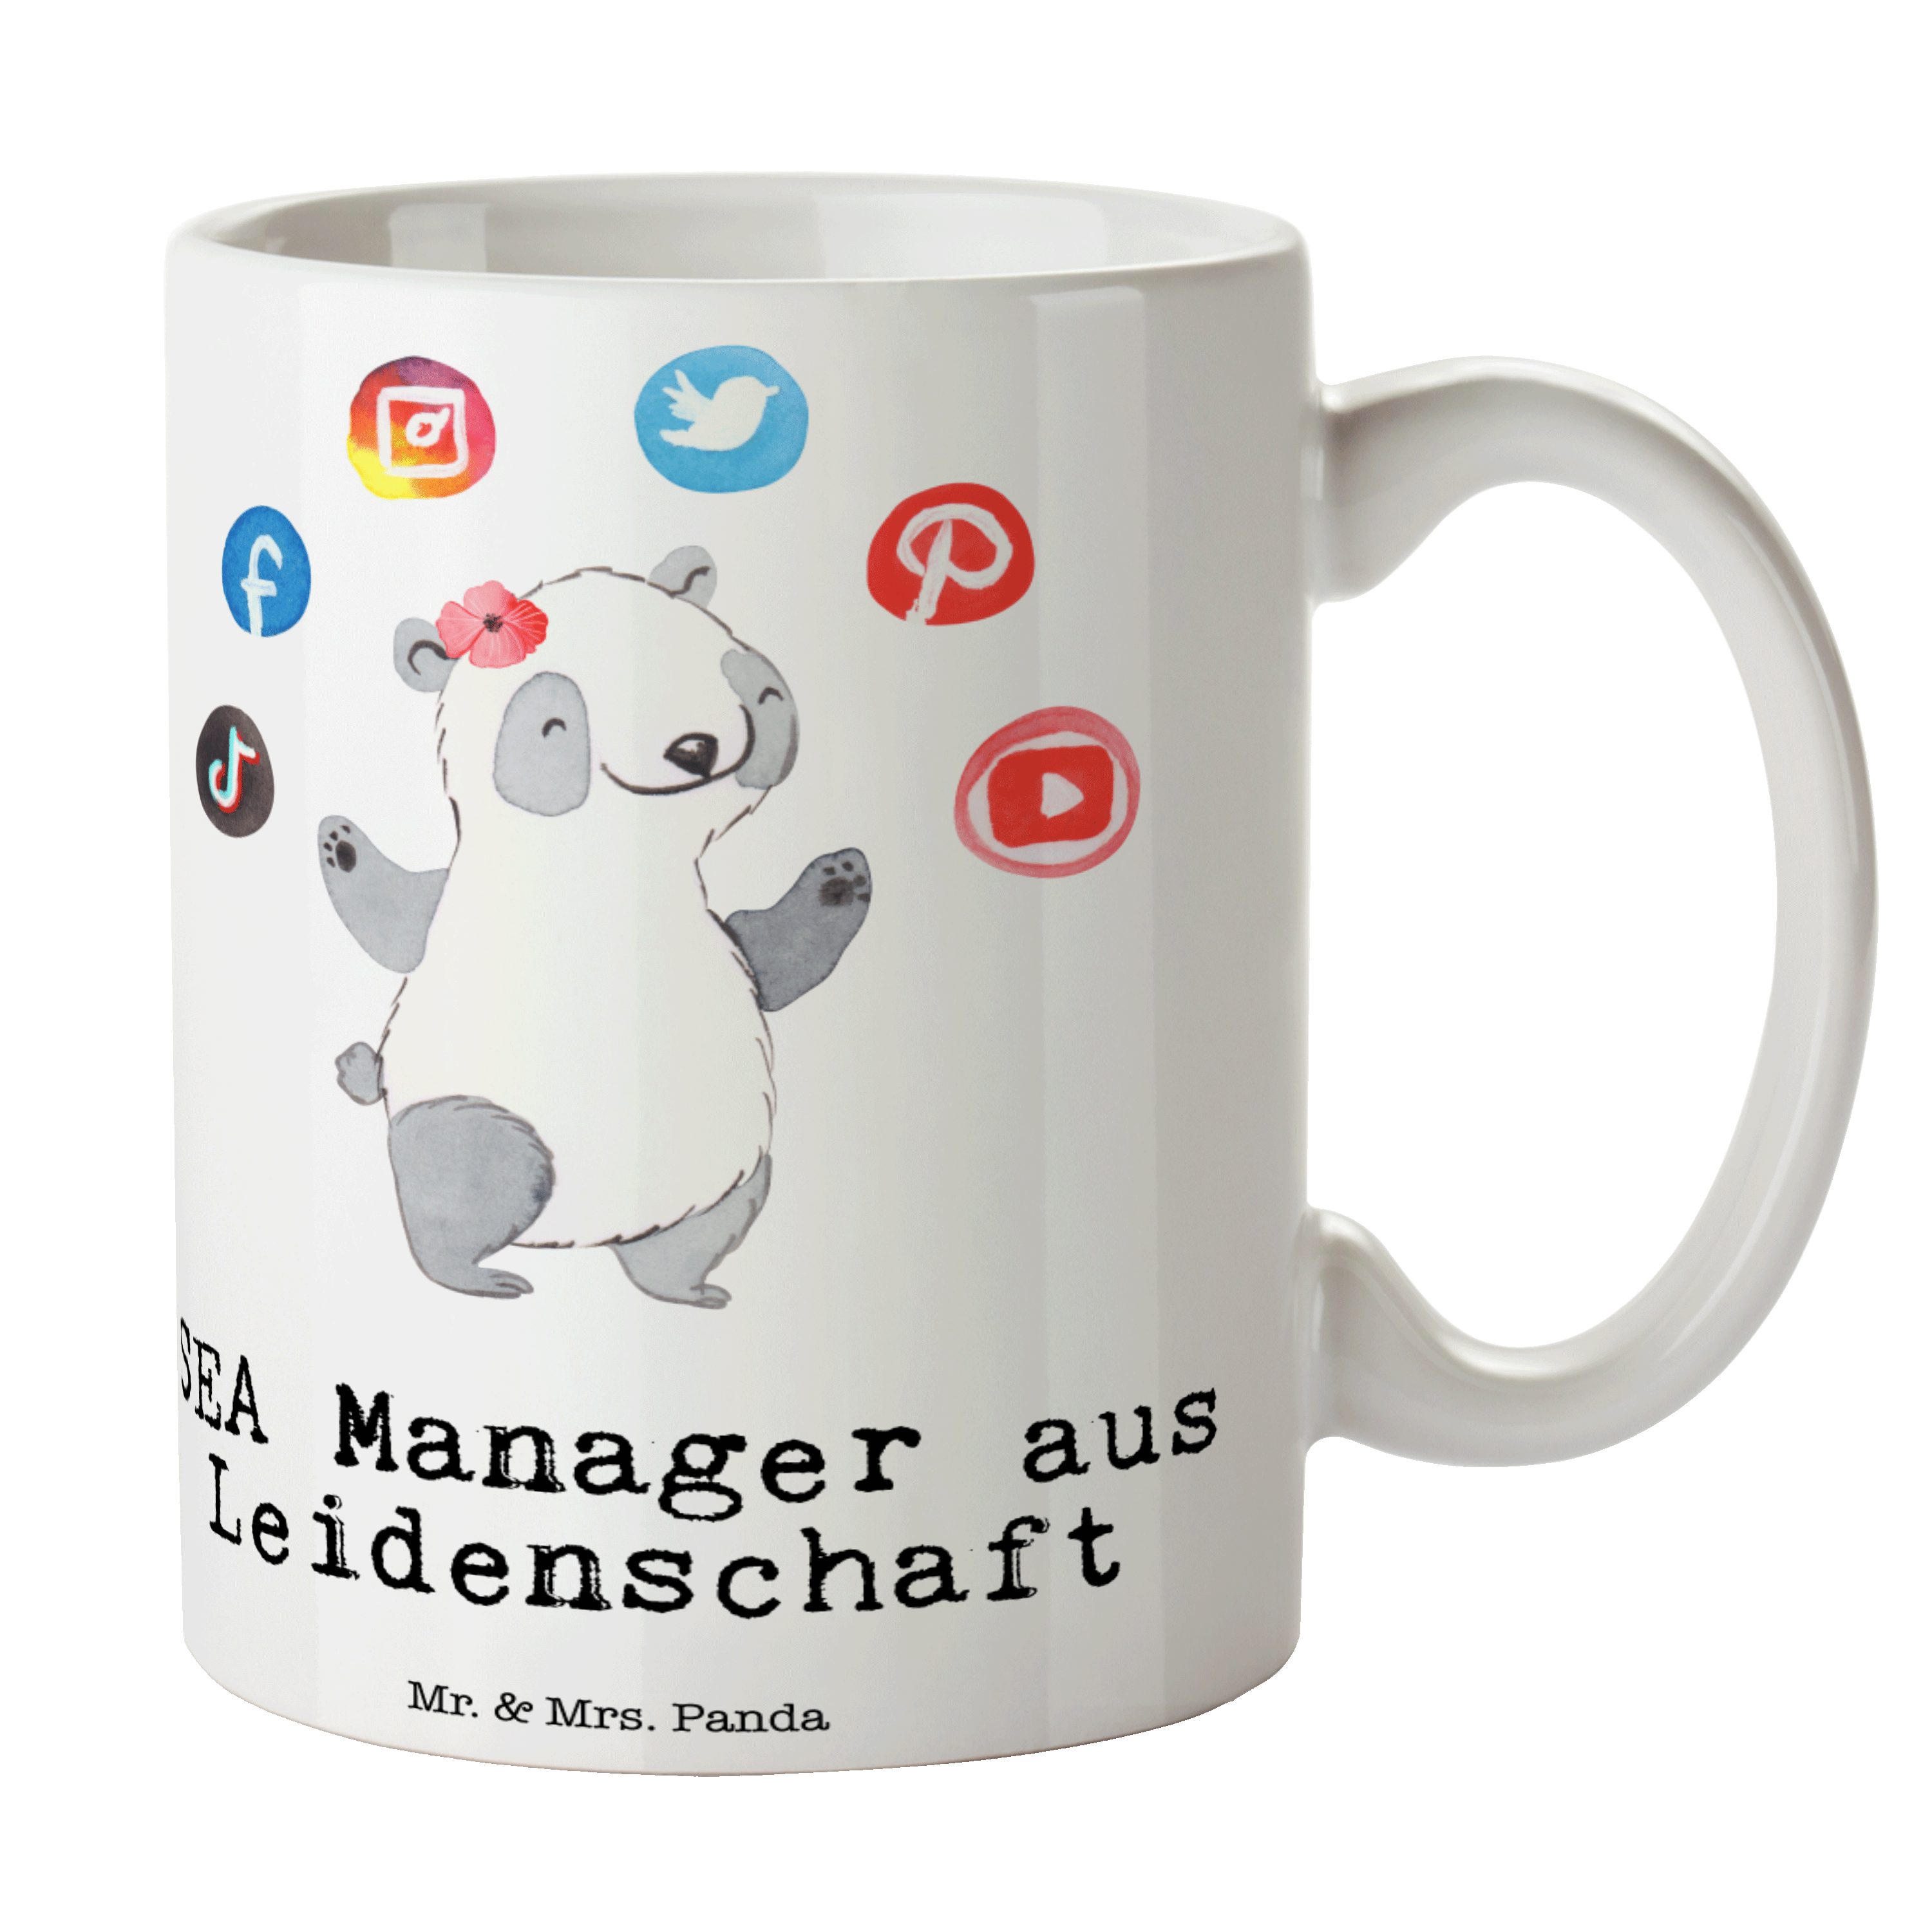 Mr. & Mrs. Panda Tasse Geschenk, Manager Keramik Tasse, Kaffe, Leidenschaft SEA Weiß - aus Geschenk 